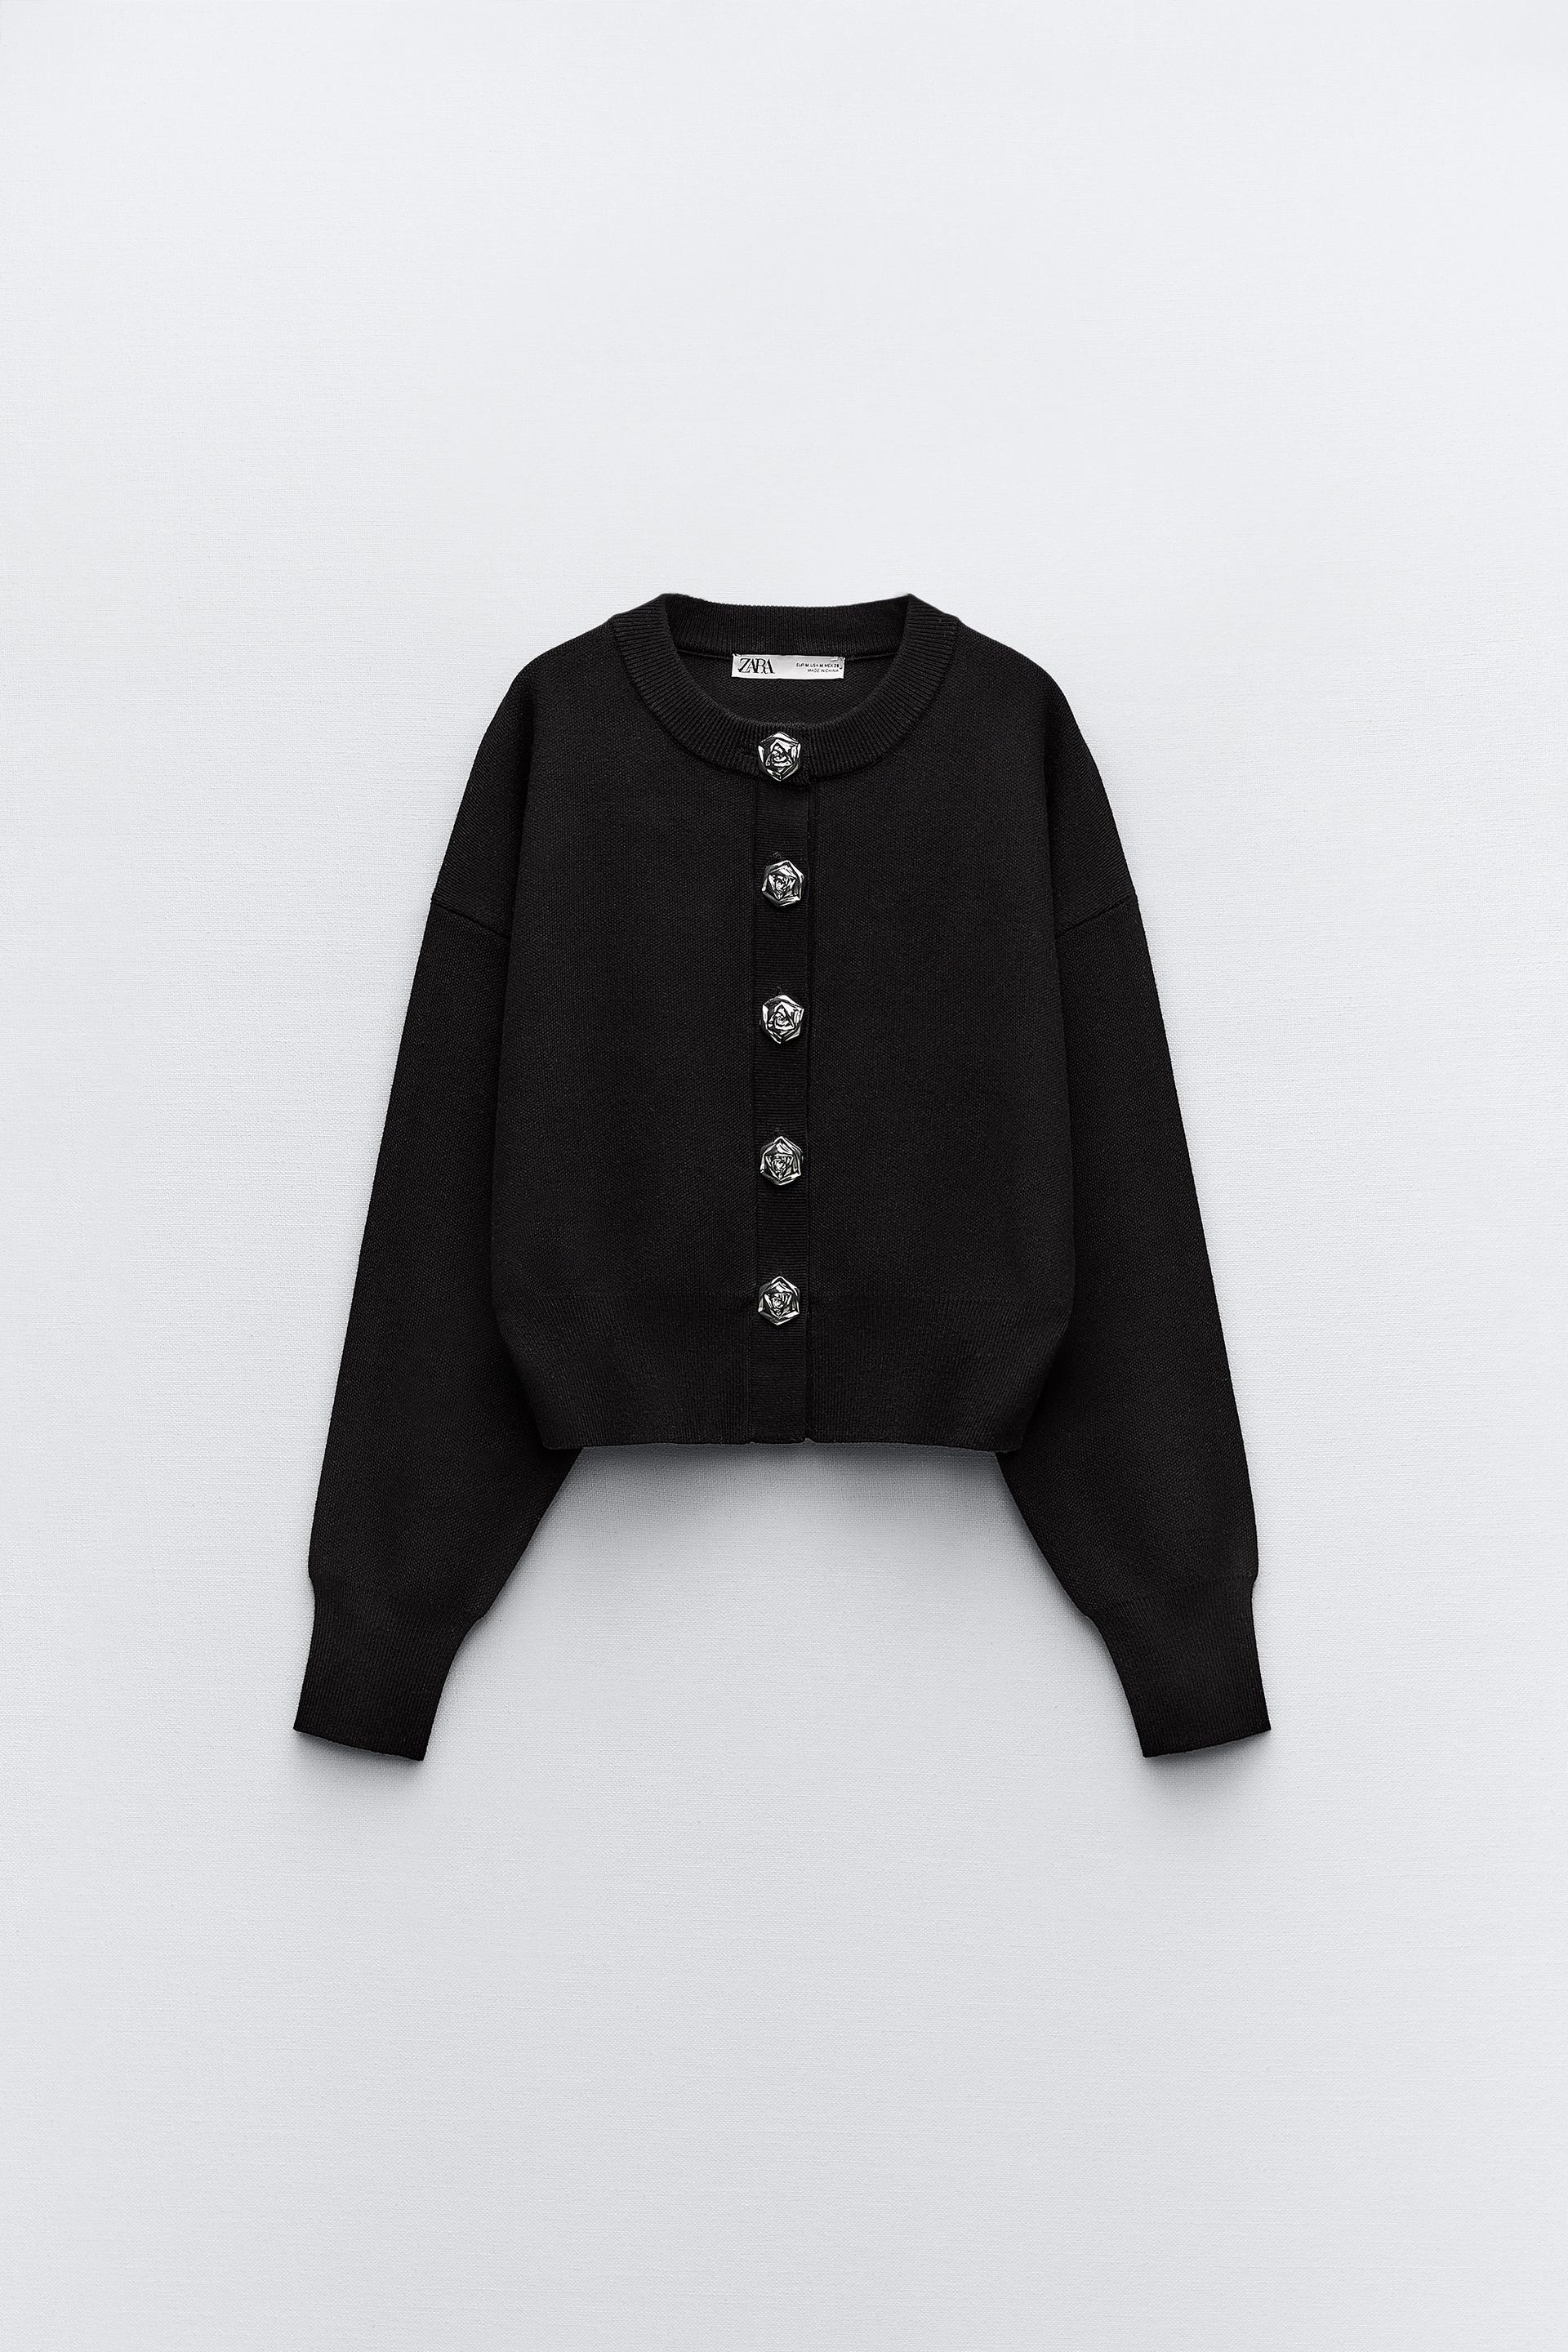 Zara Black Long Duster Cardigan Sweater Button Open Knit Medium Cotton Boho